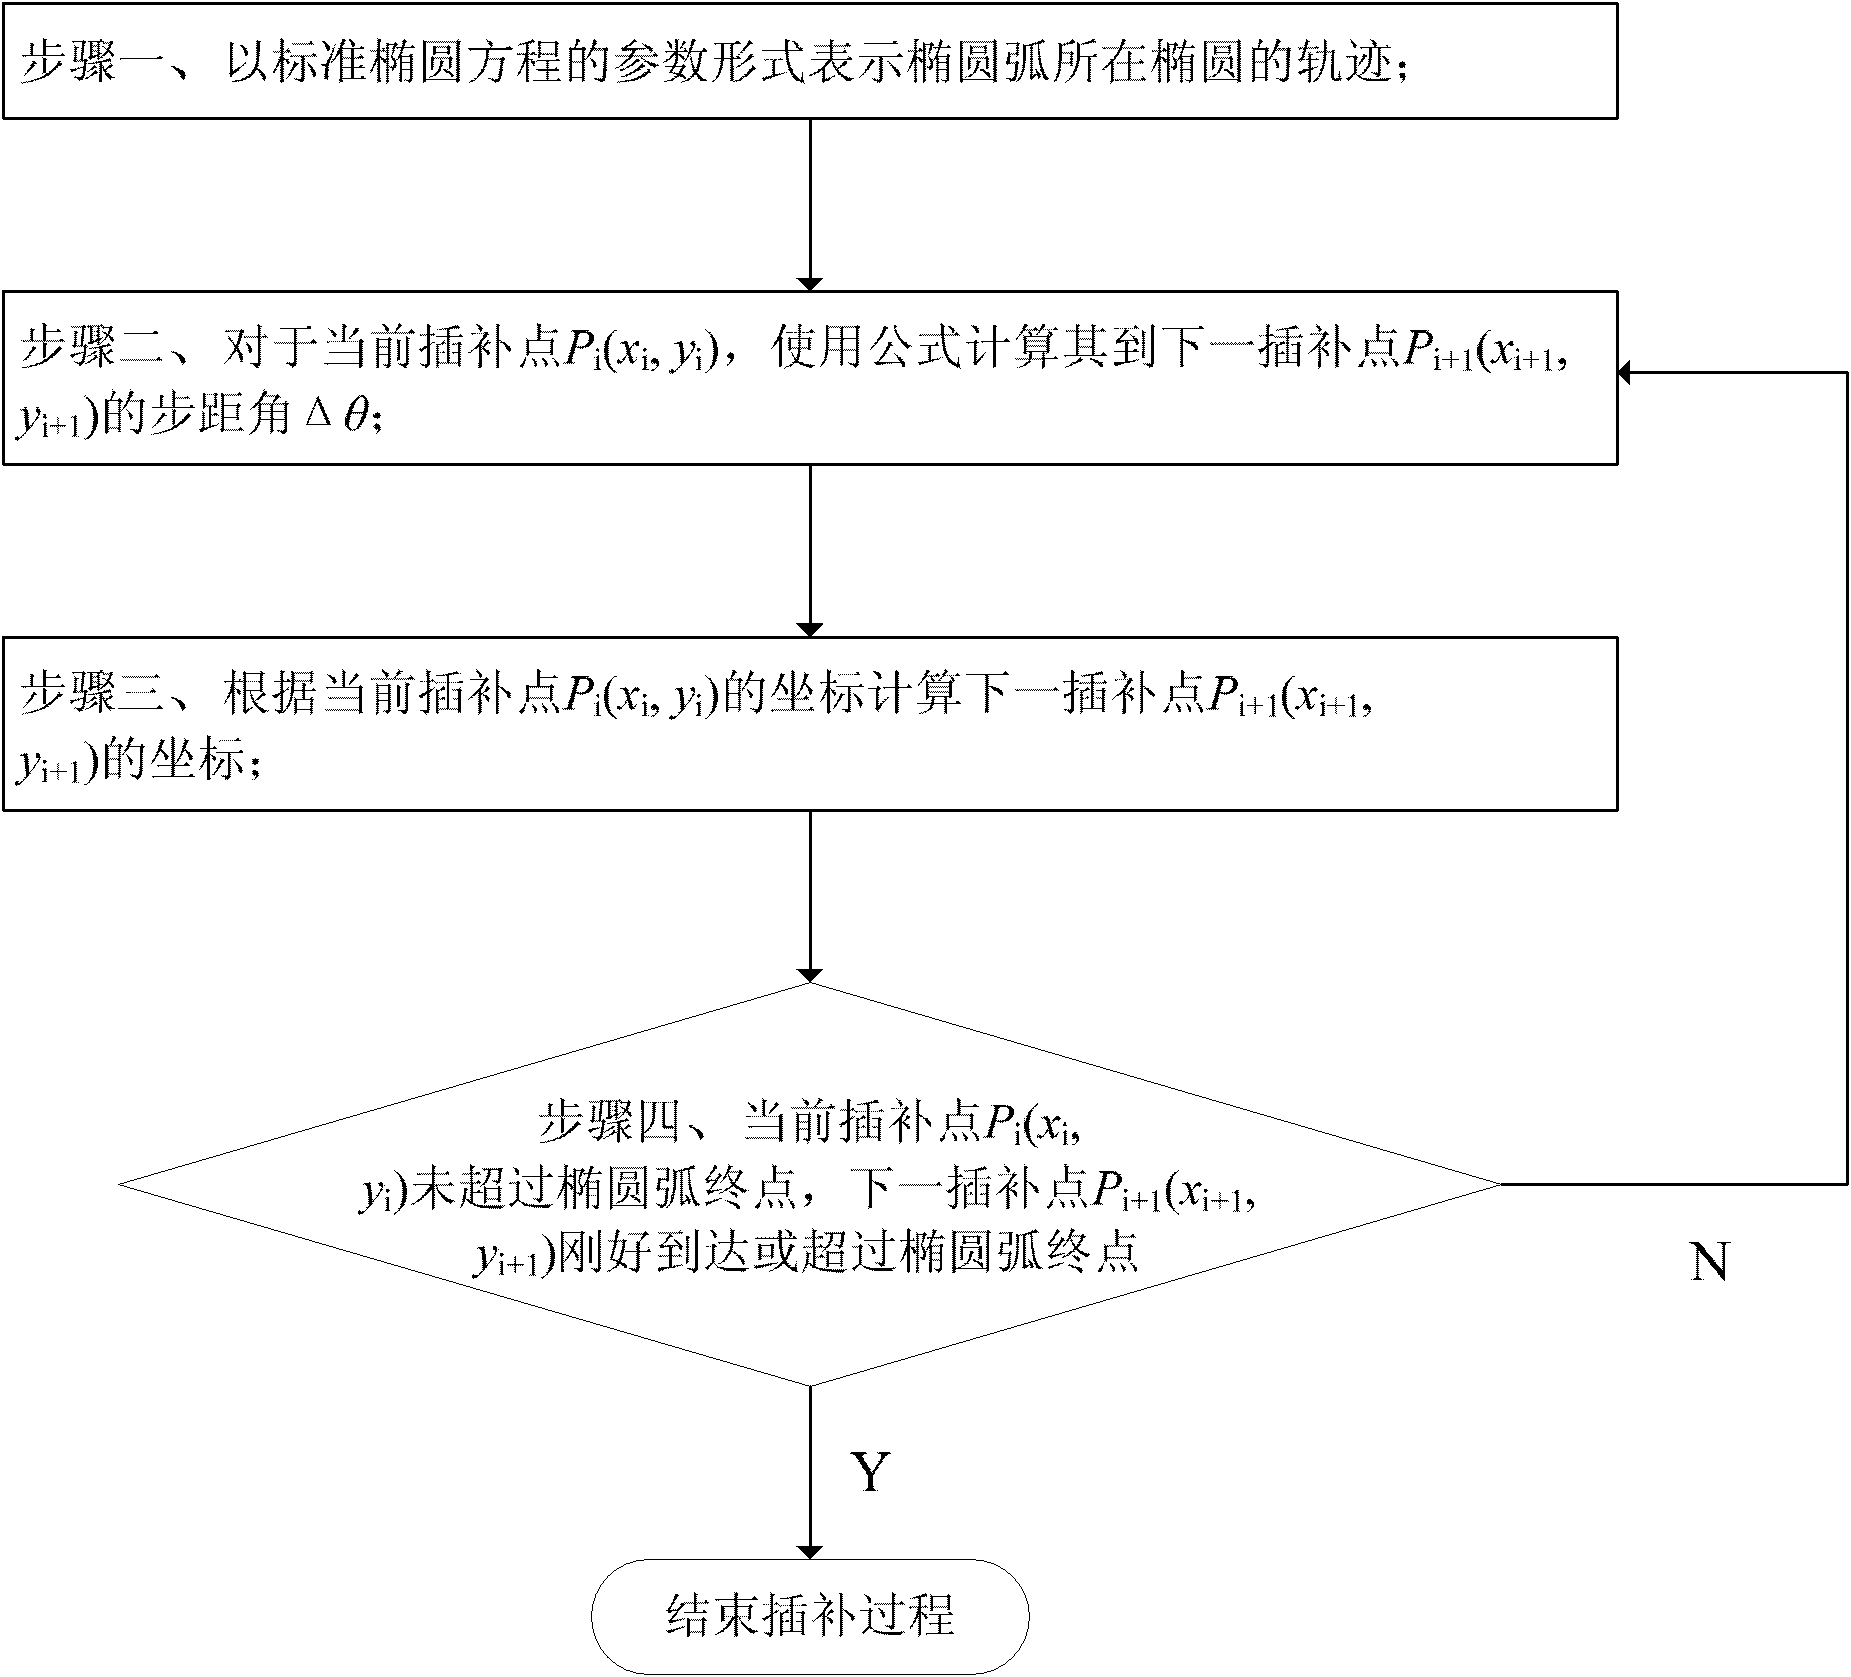 Elliptic arc interpolation method